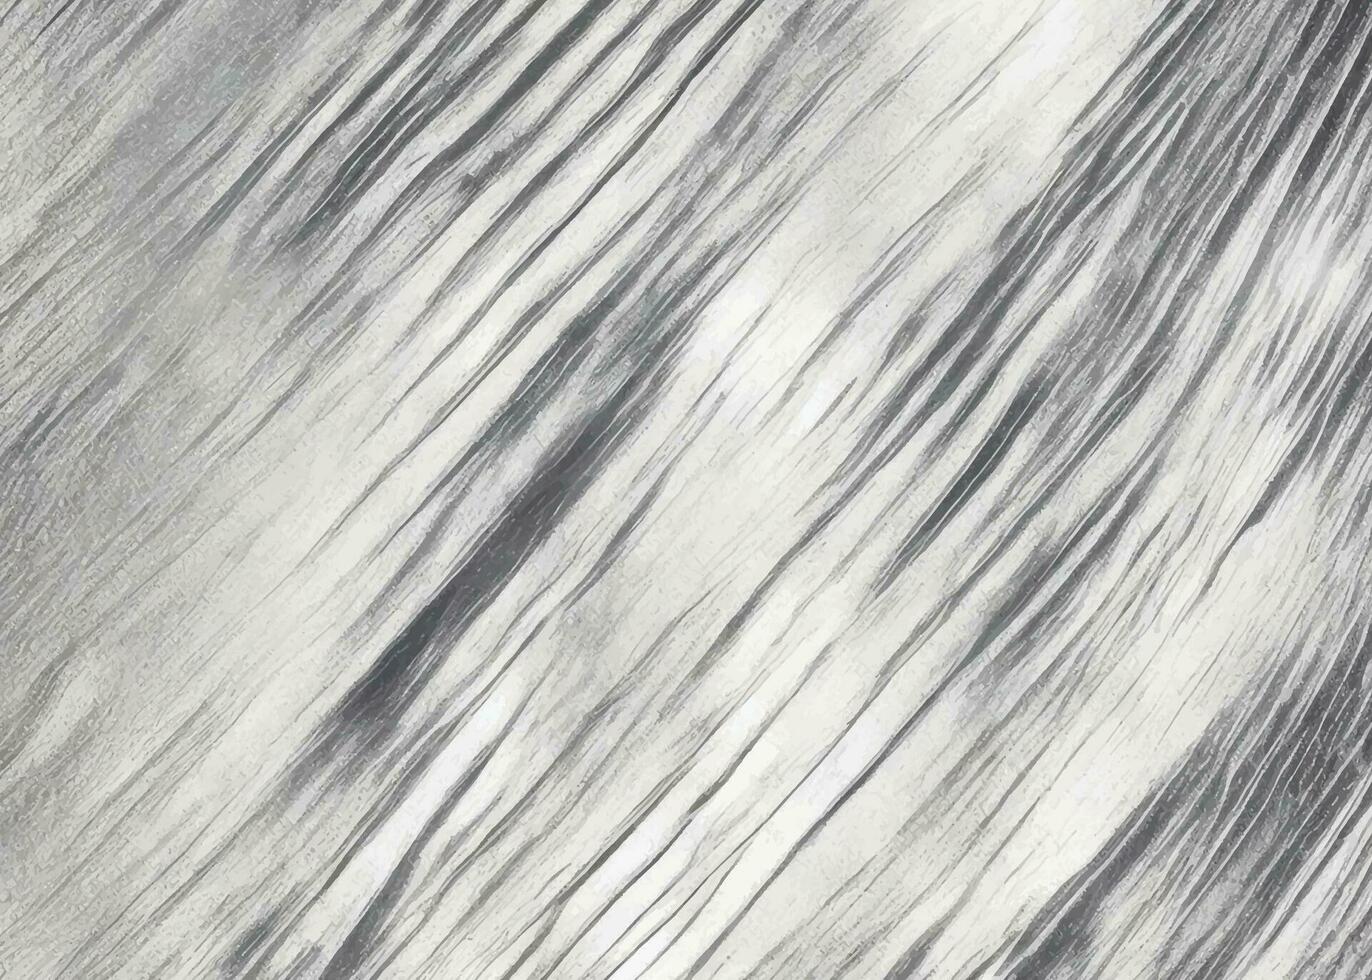 Silver Foil Shiny paper texture background, Metallic background, foil texture, paper texture, Background, Silver foil background, gray platinum metallic texture vector